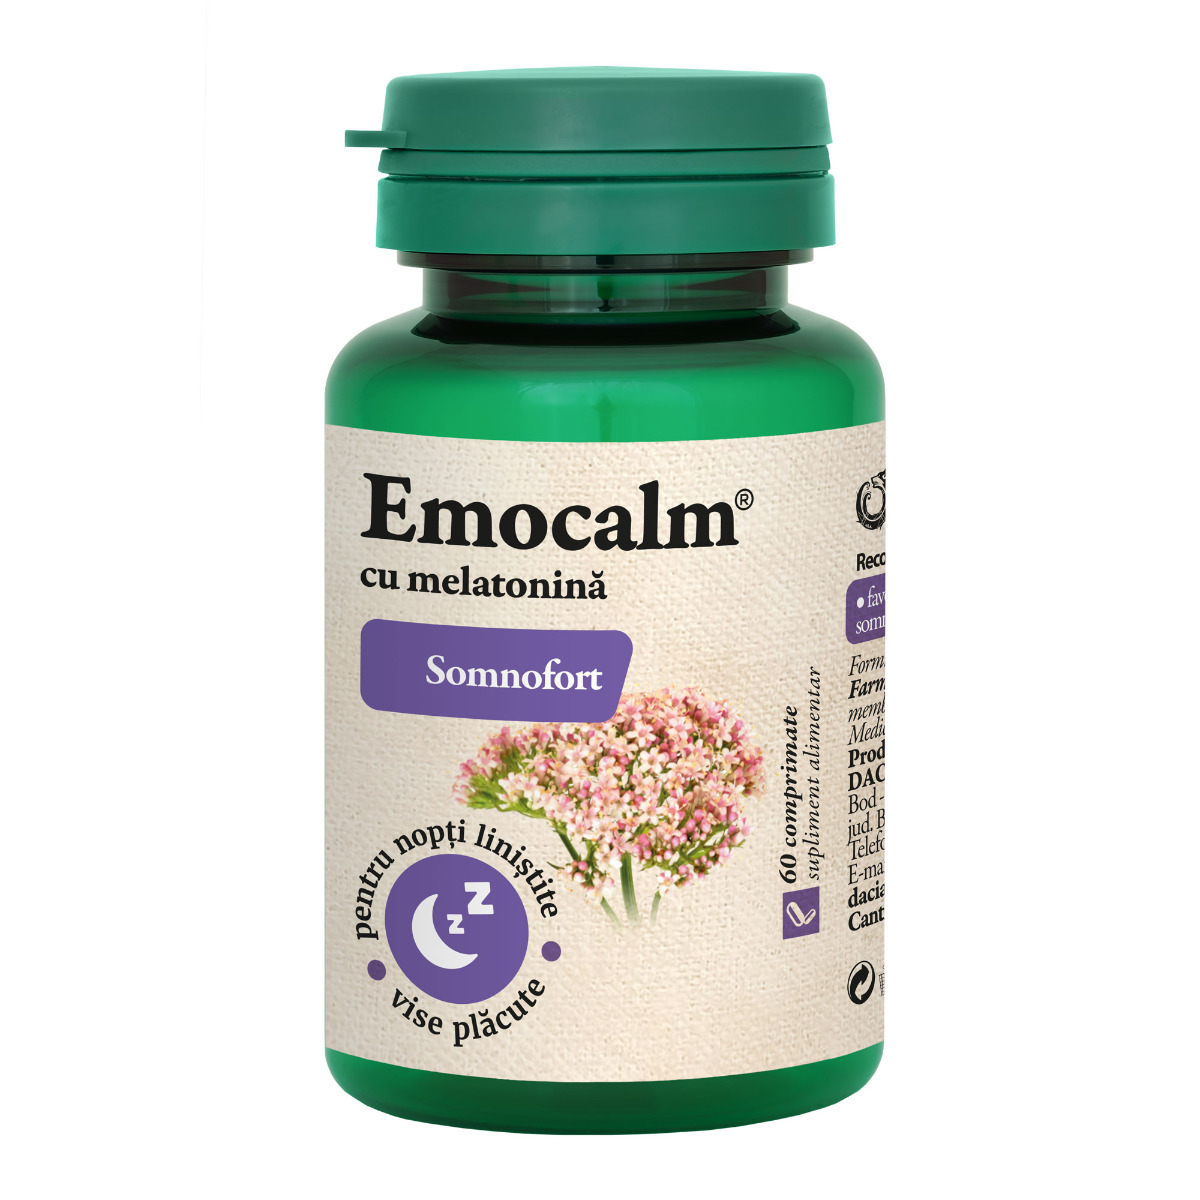 Emocalm cu melatonina comprimate Somnofort Dacia Plant